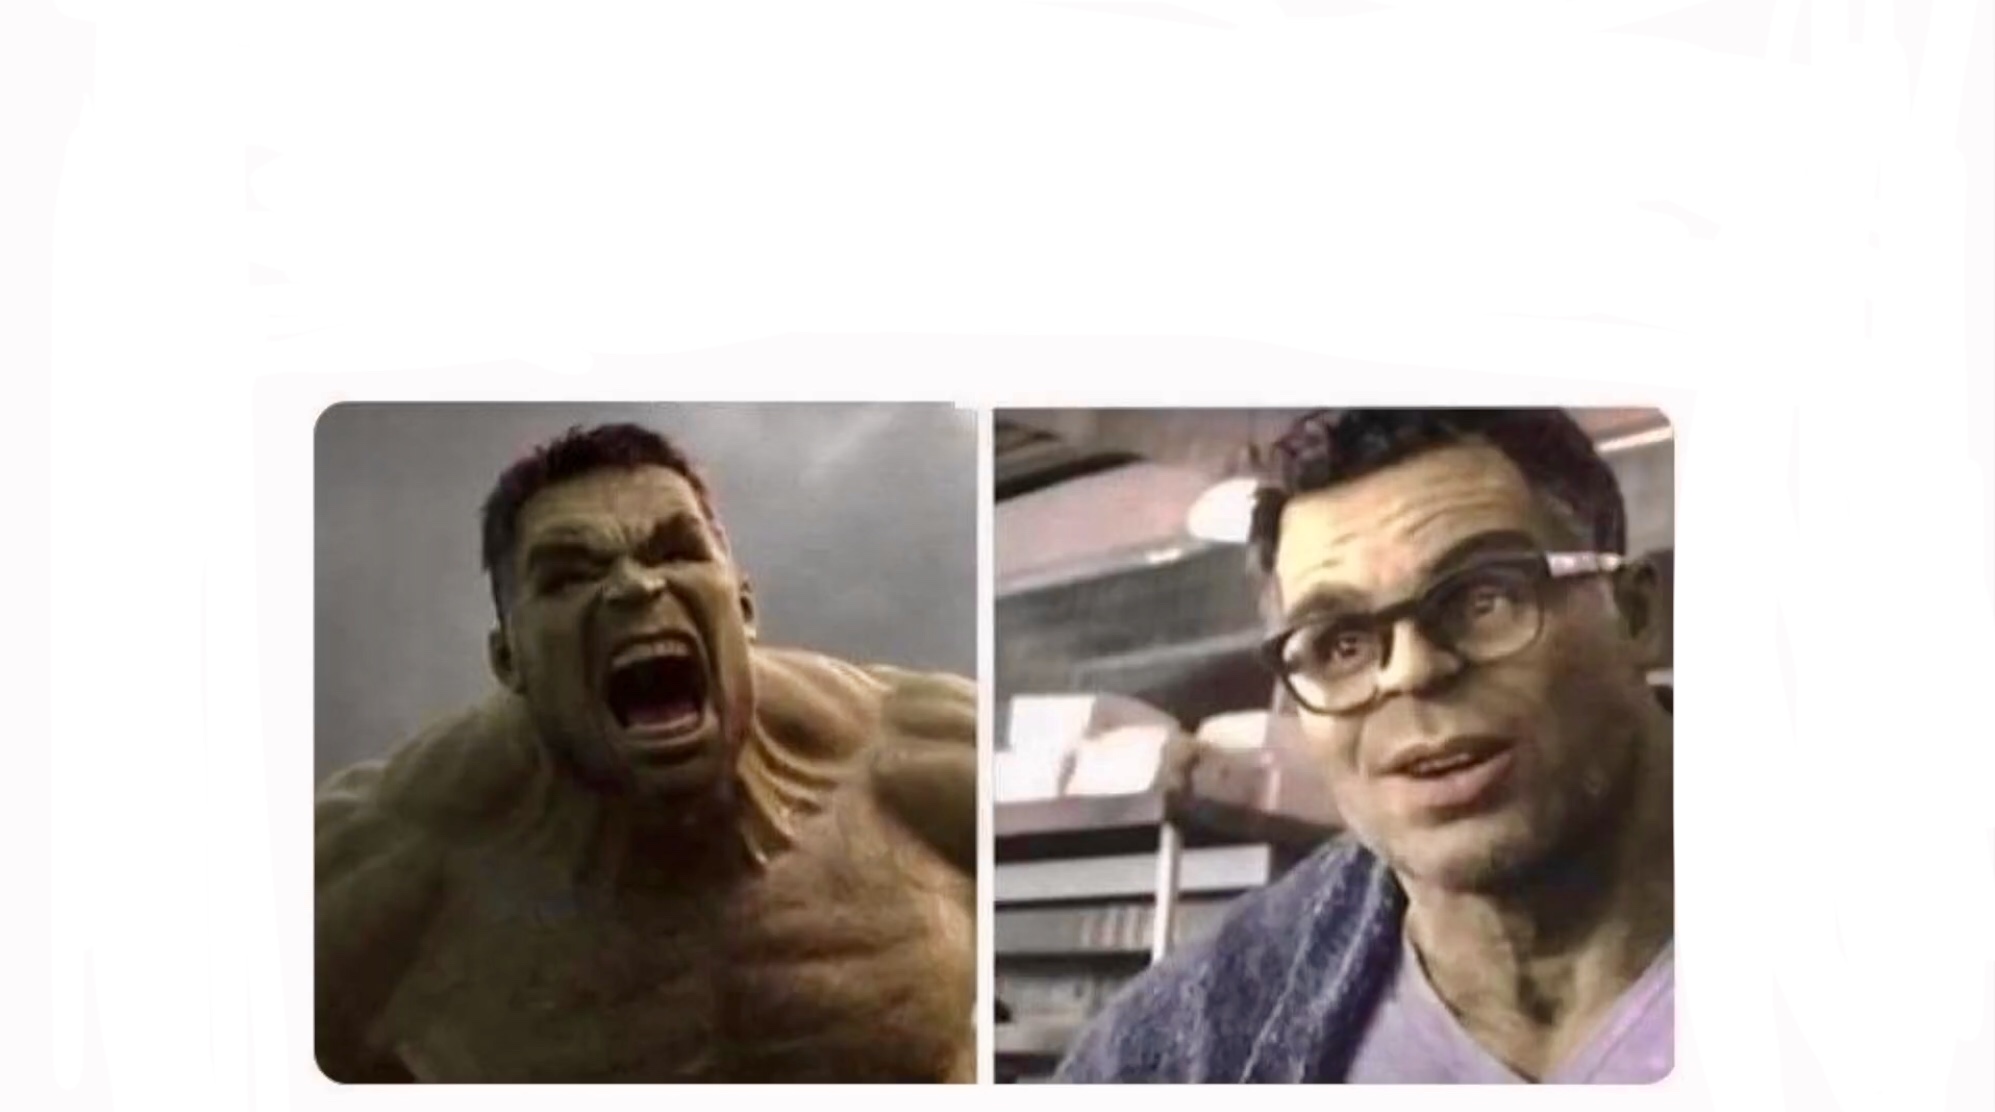 High Quality Hulk Blank Meme Template